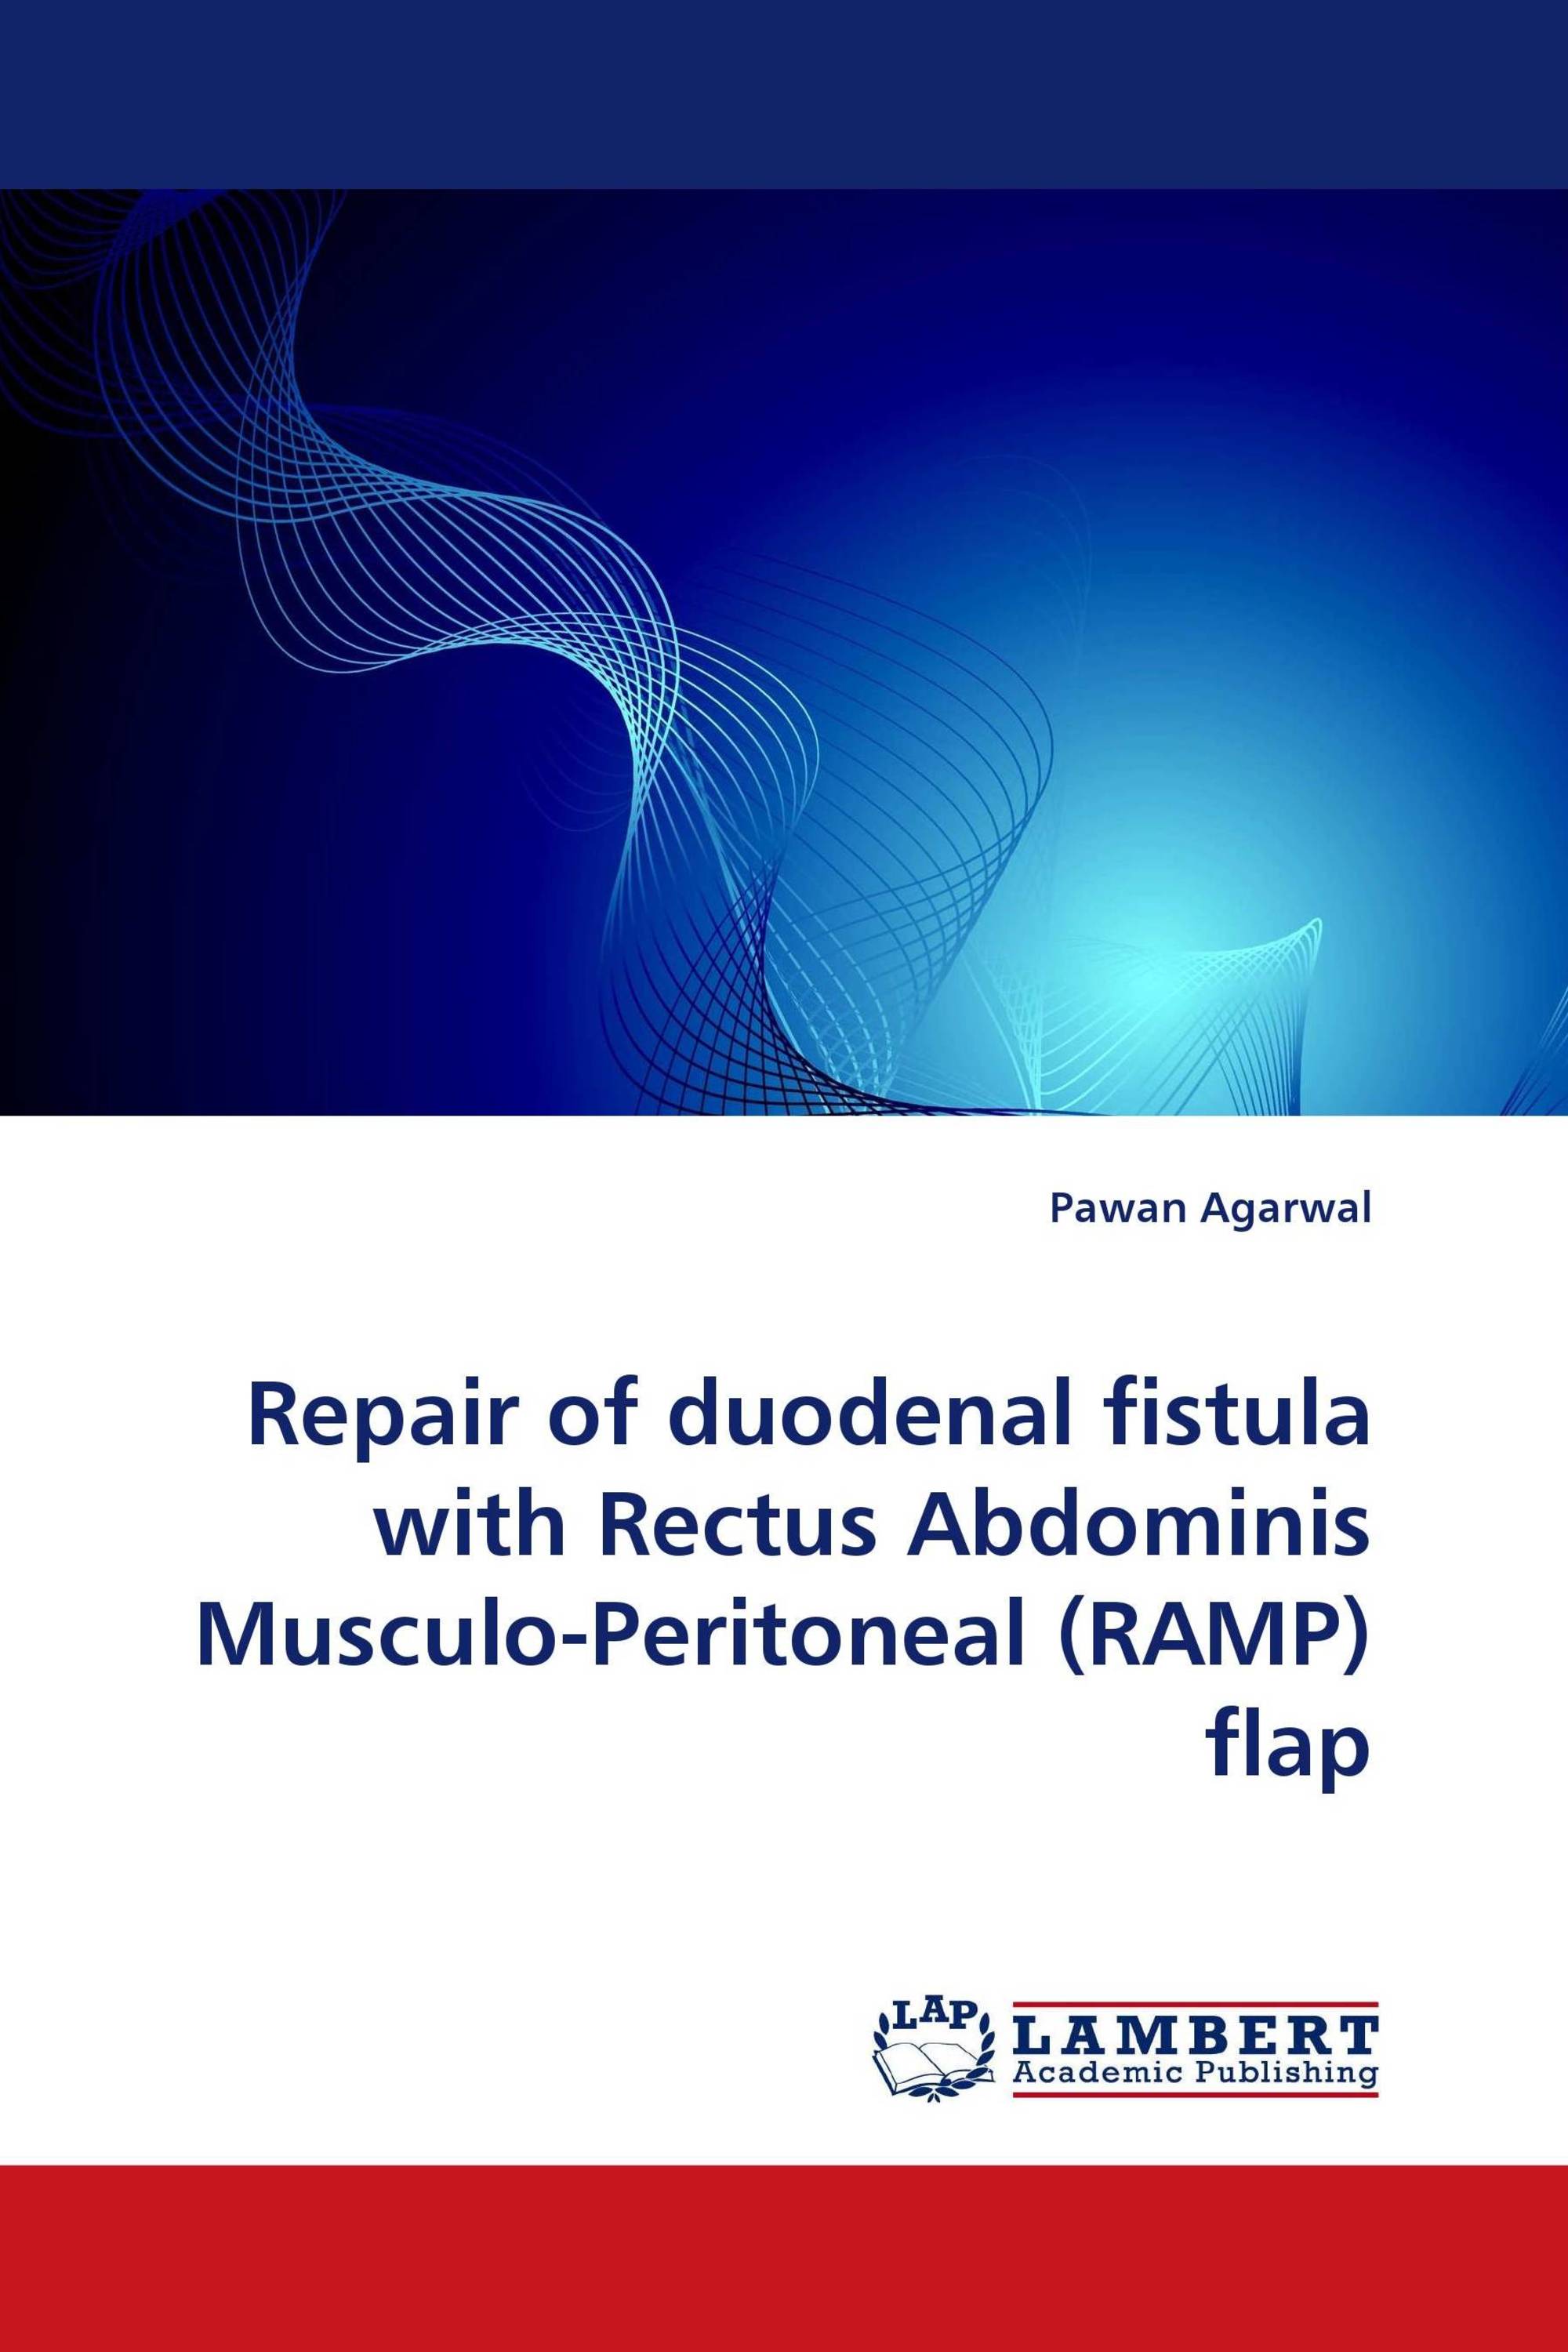 Repair of duodenal fistula with Rectus Abdominis Musculo-Peritoneal (RAMP) flap